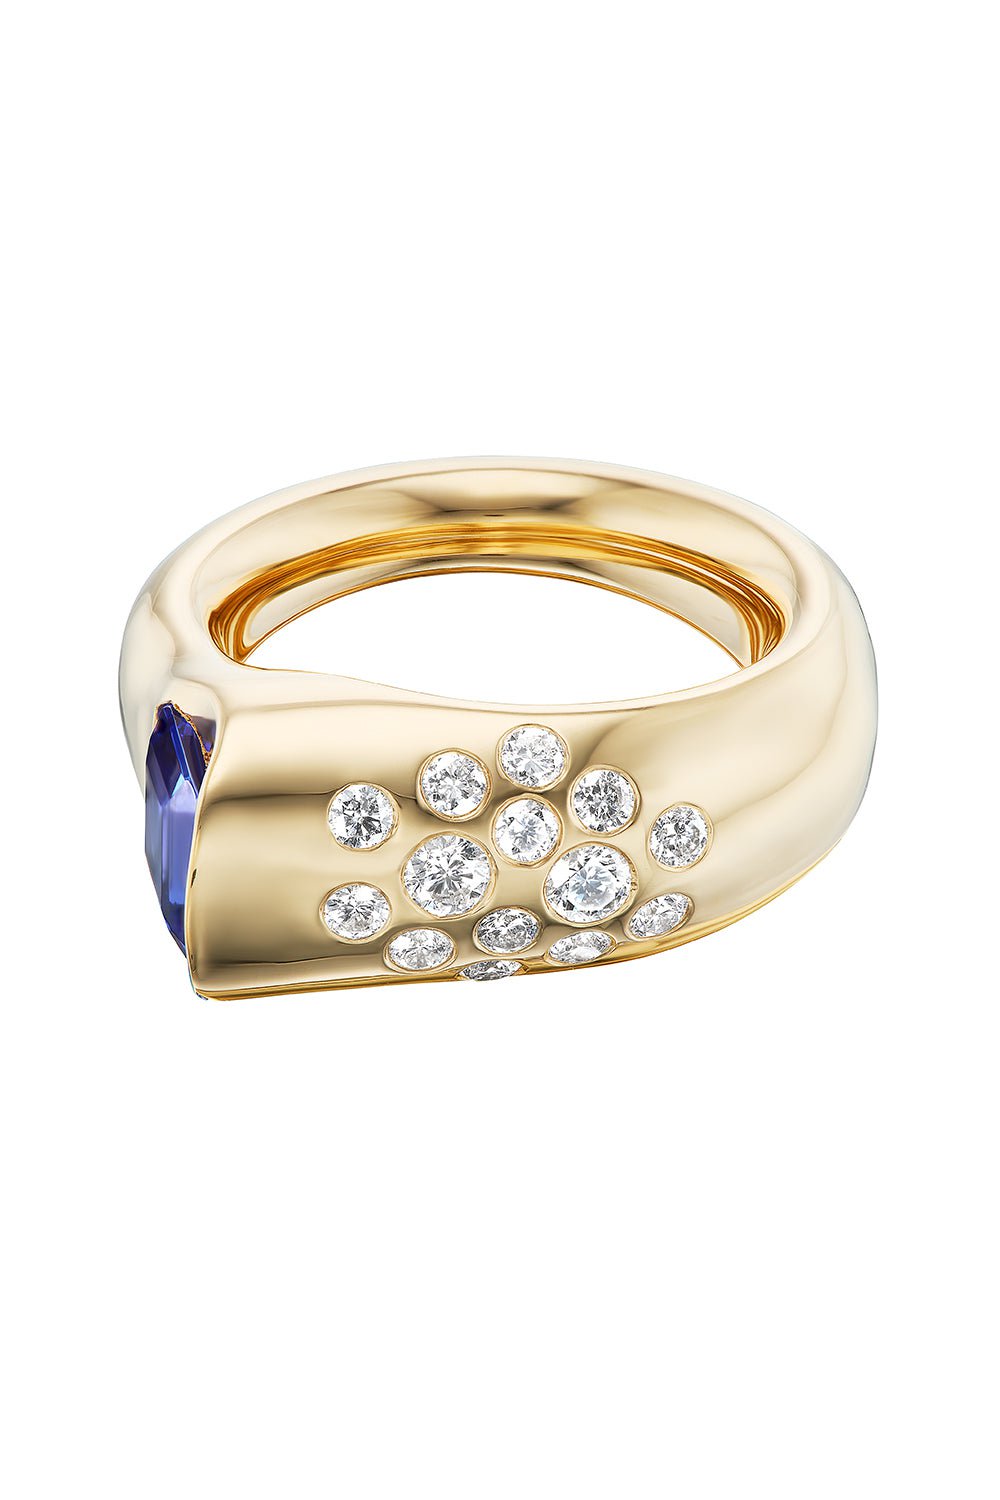 UNIFORM OBJECT-Blue Sapphire Diamond Battery Ring-YELLOW GOLD